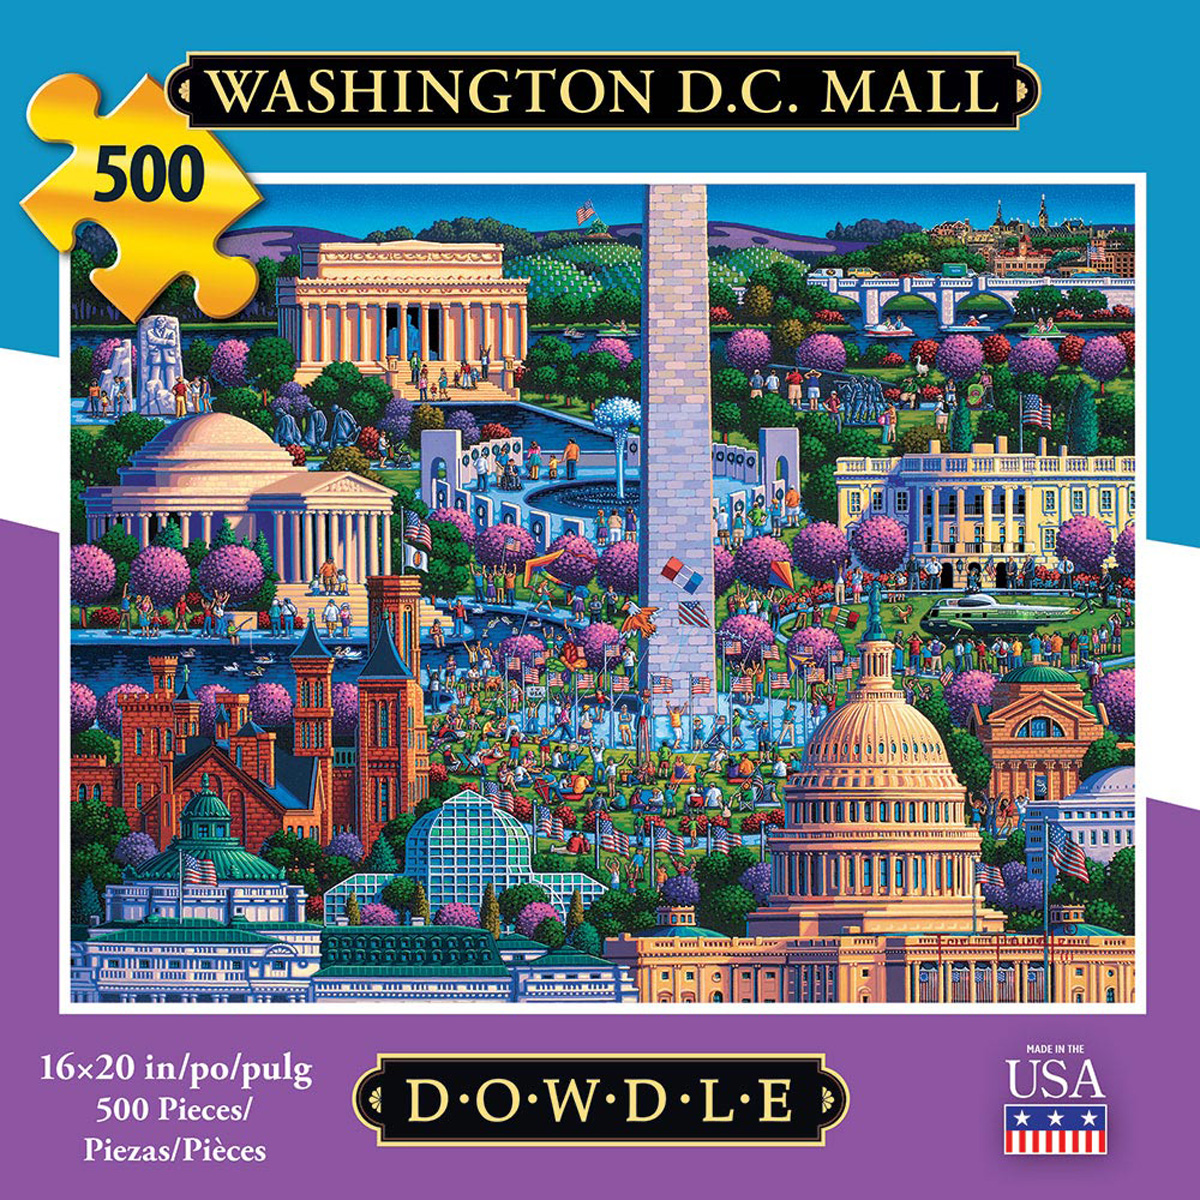 Washington D.C. Mall